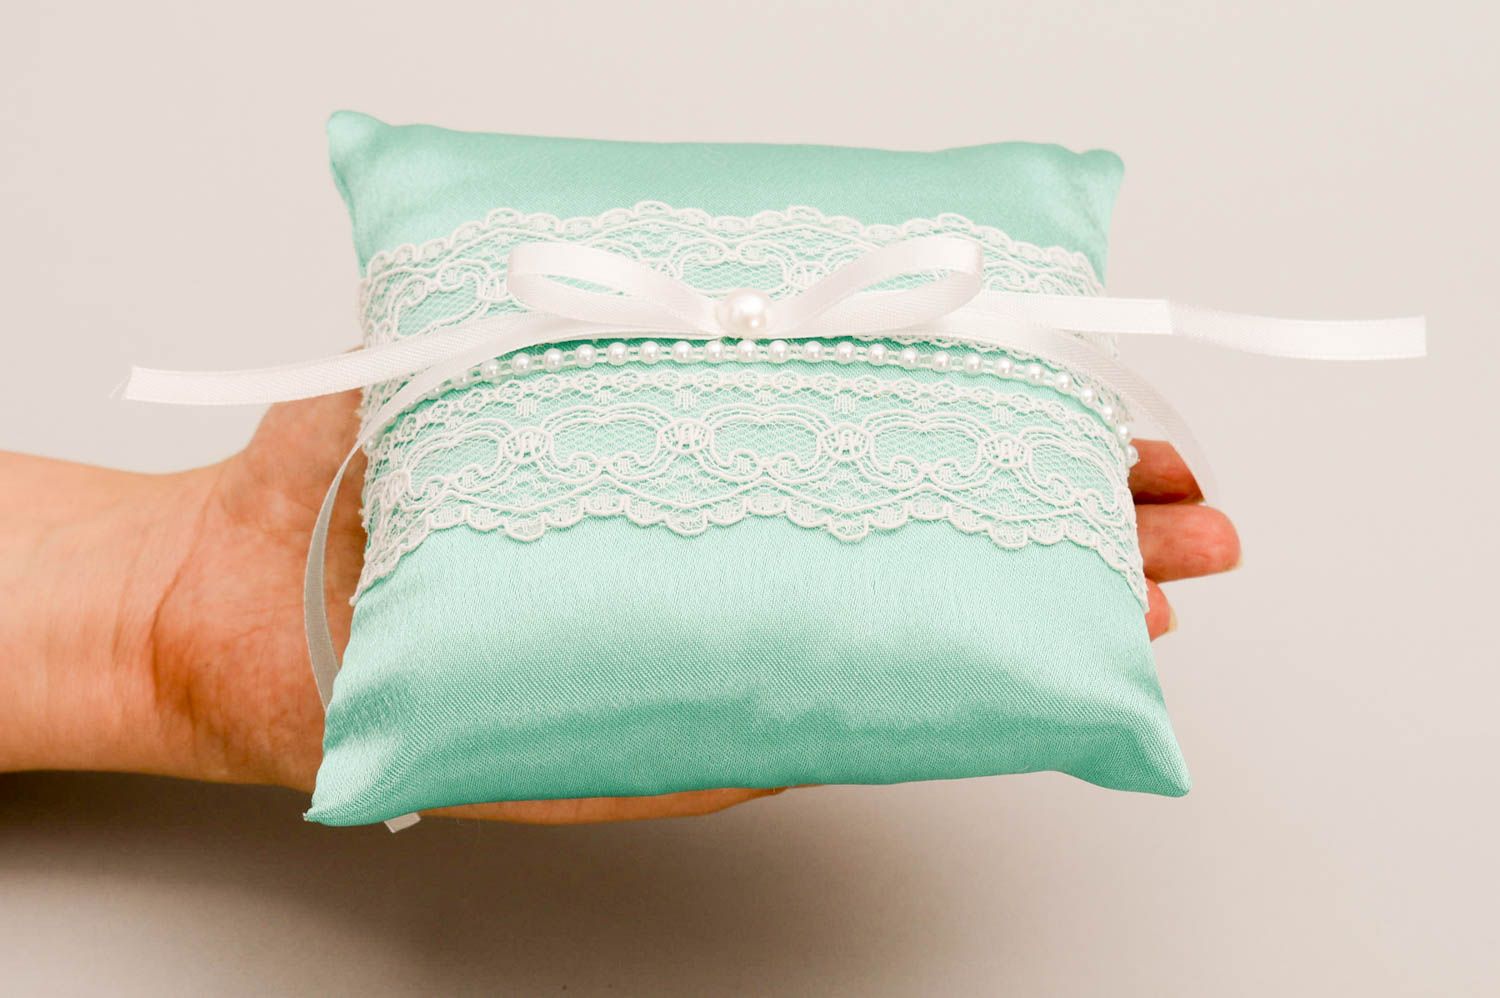 Handmade pillow designer pillow for rings wedding accessories decor ideas photo 5